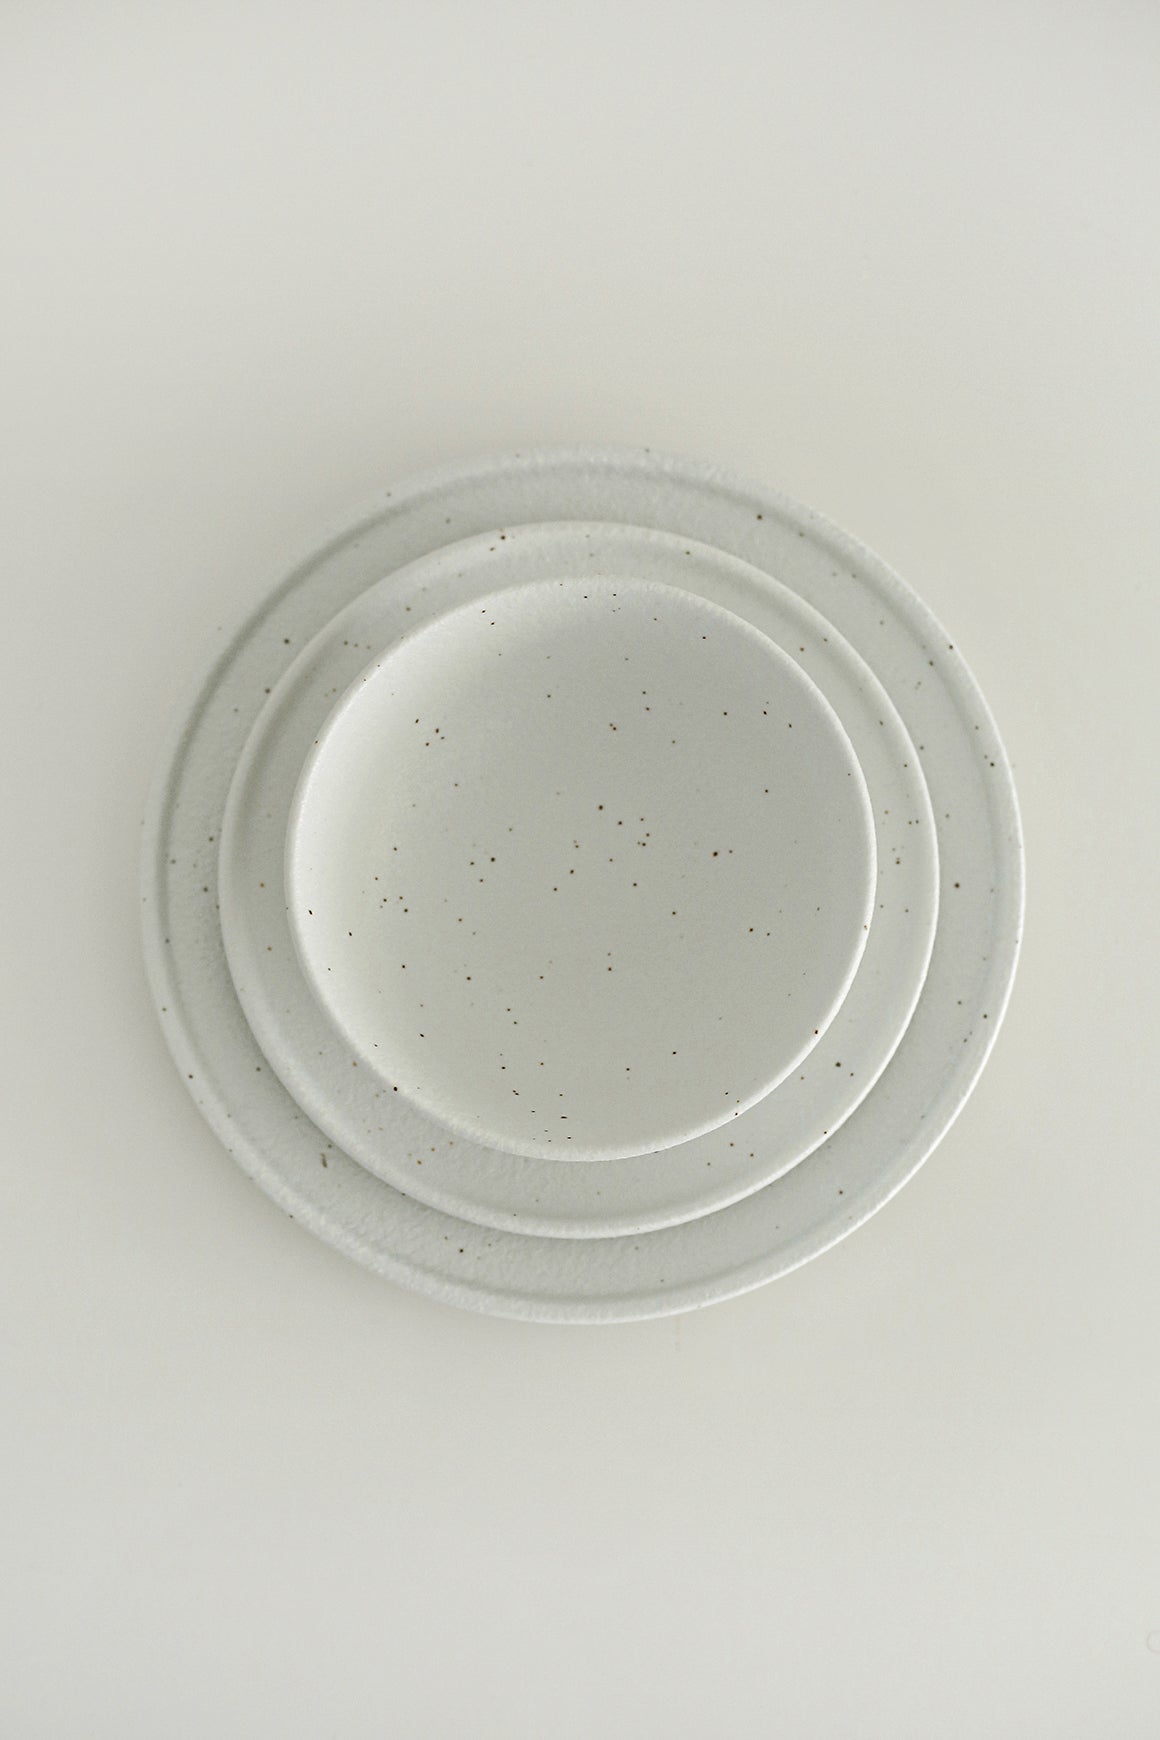 Luxe dinerbord - 28 cm - porselein wit met bruine stipjes